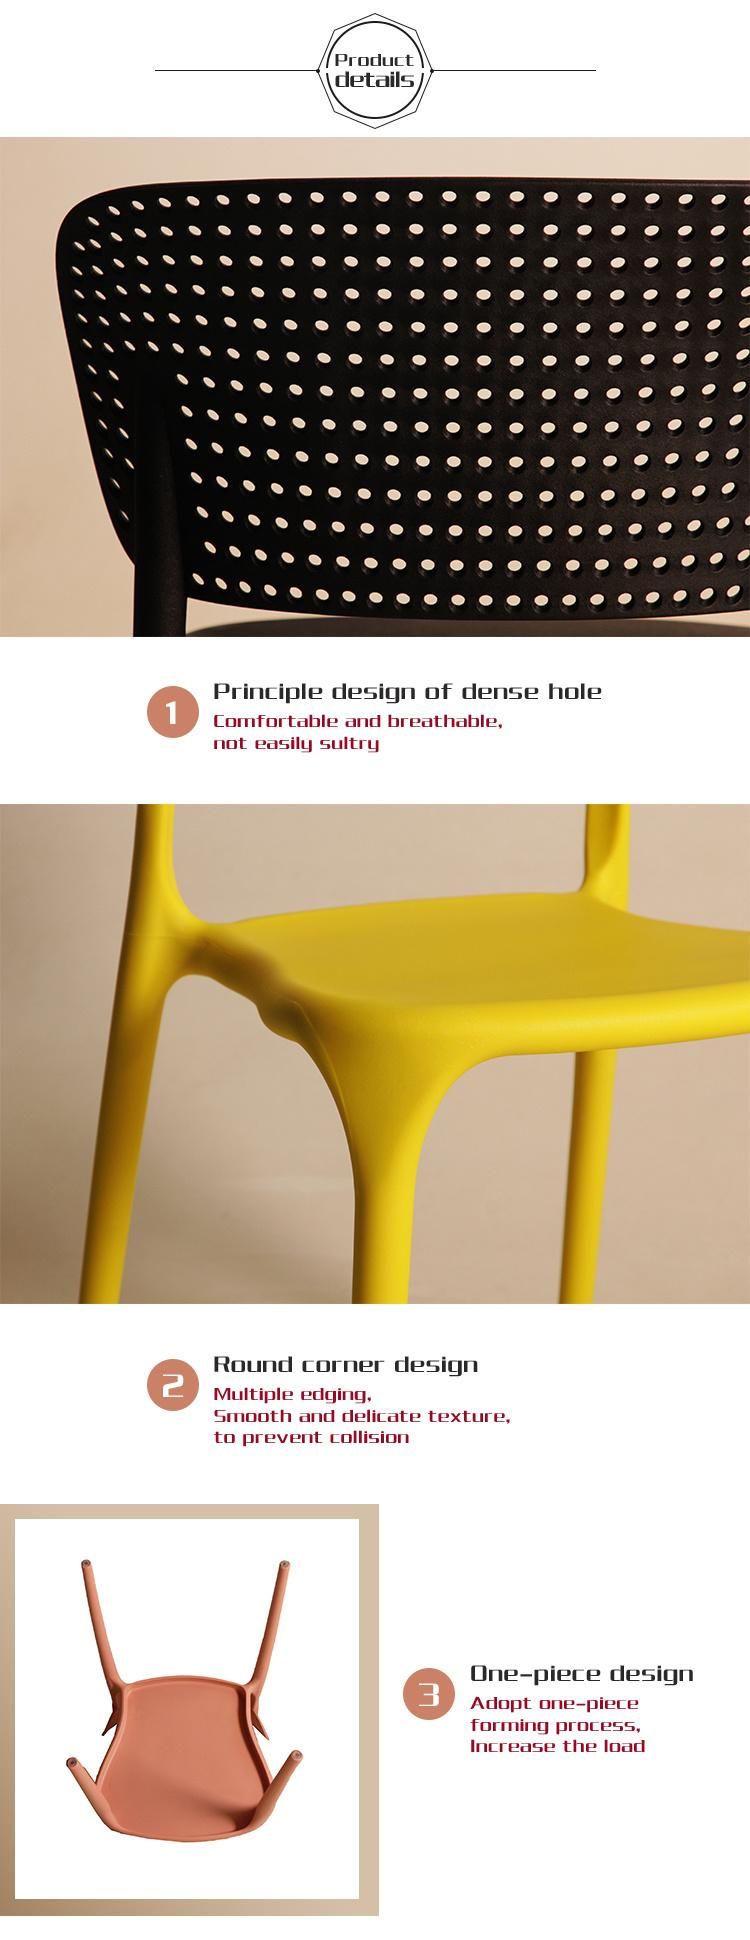 Orikon Stackable Dining Outdoor Restaurant Kitchen Training Plastic Chair